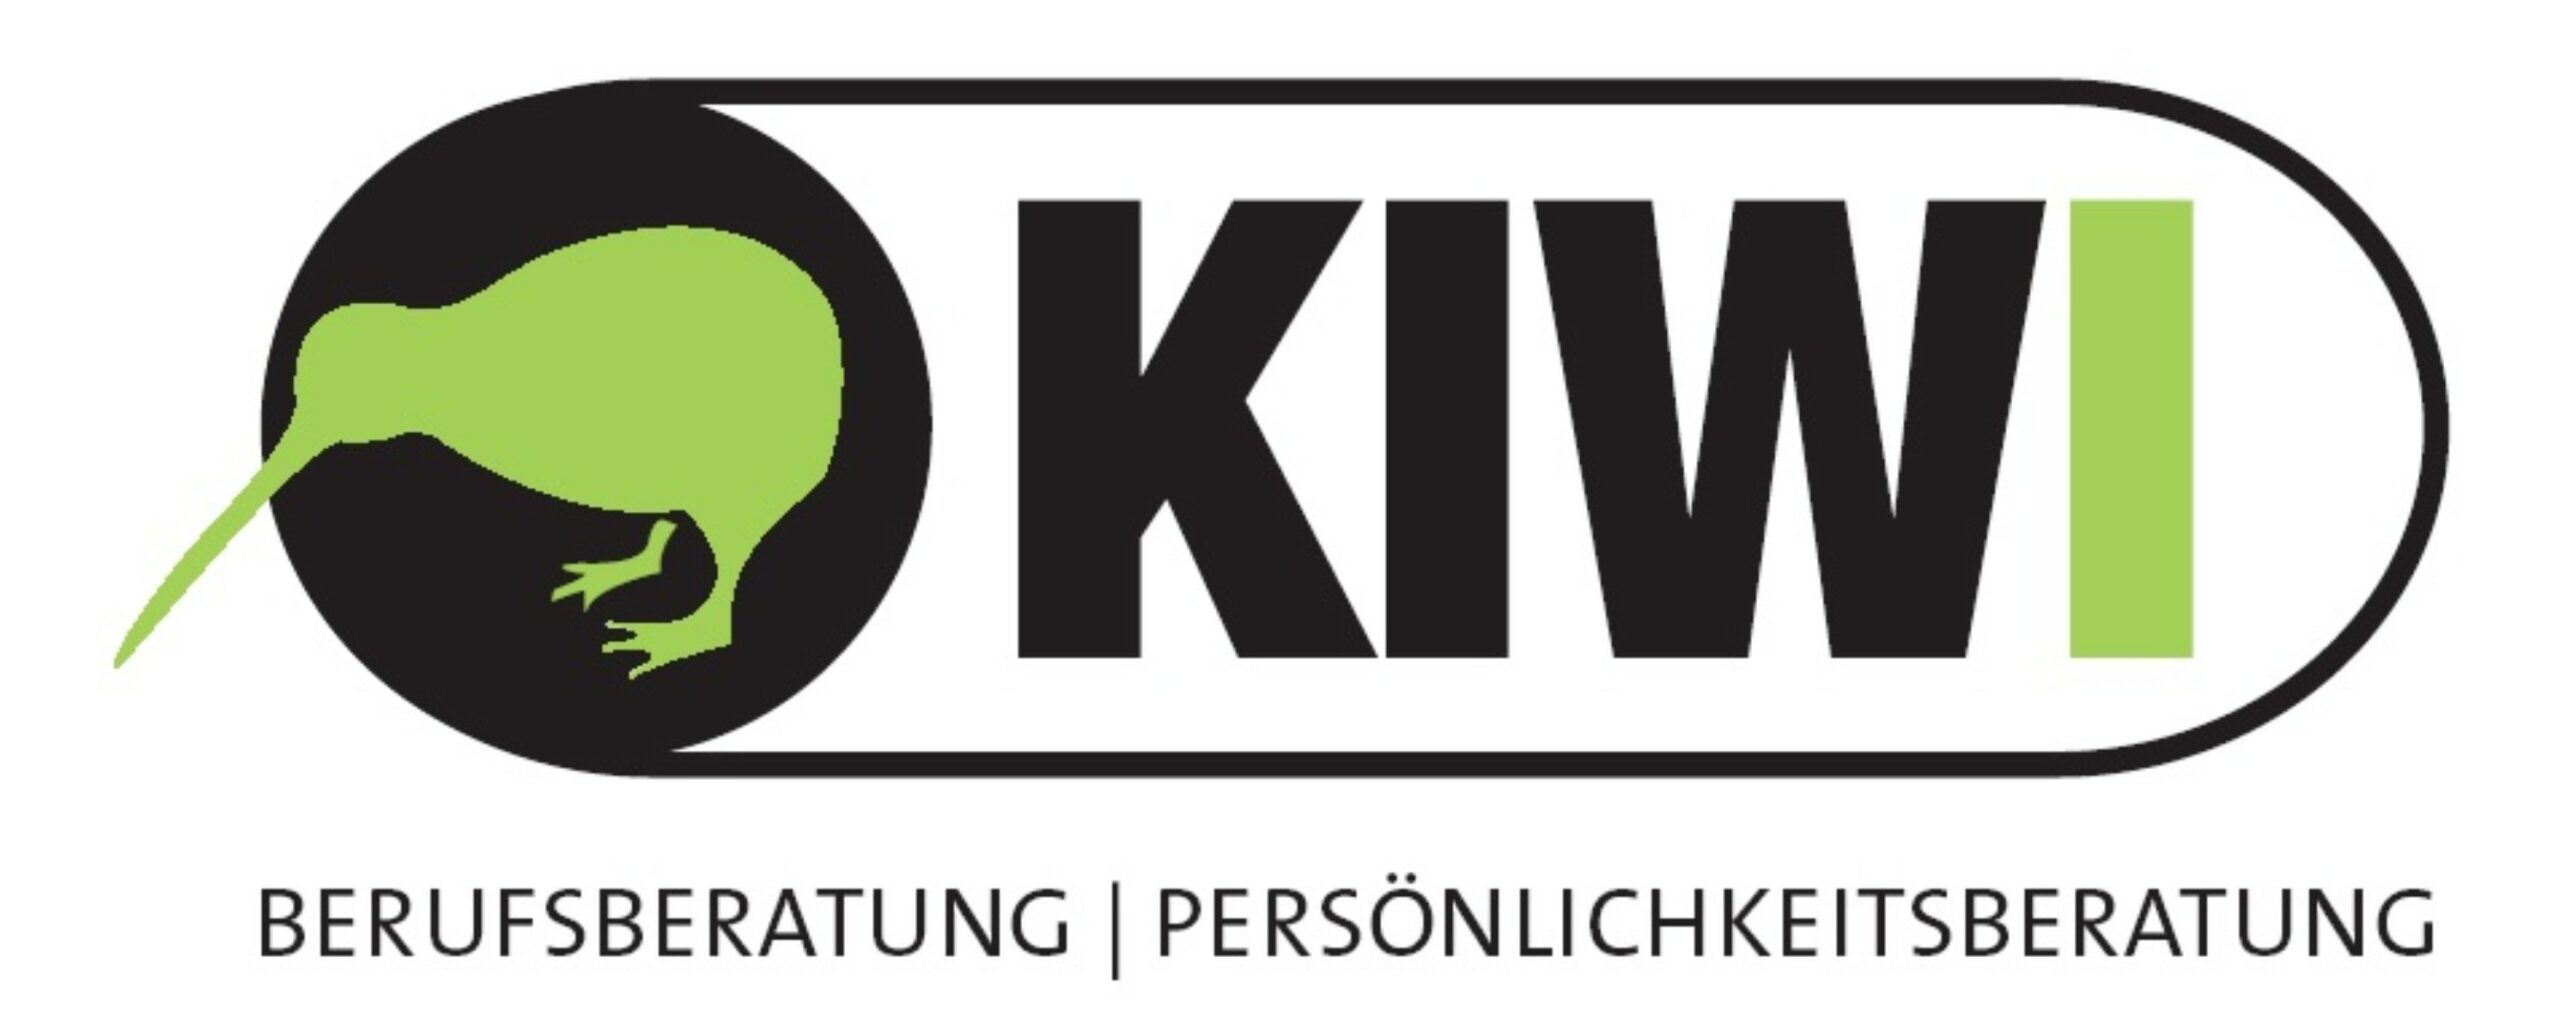 KIWI - Berufsberatung / Persönlichkeitsberatung